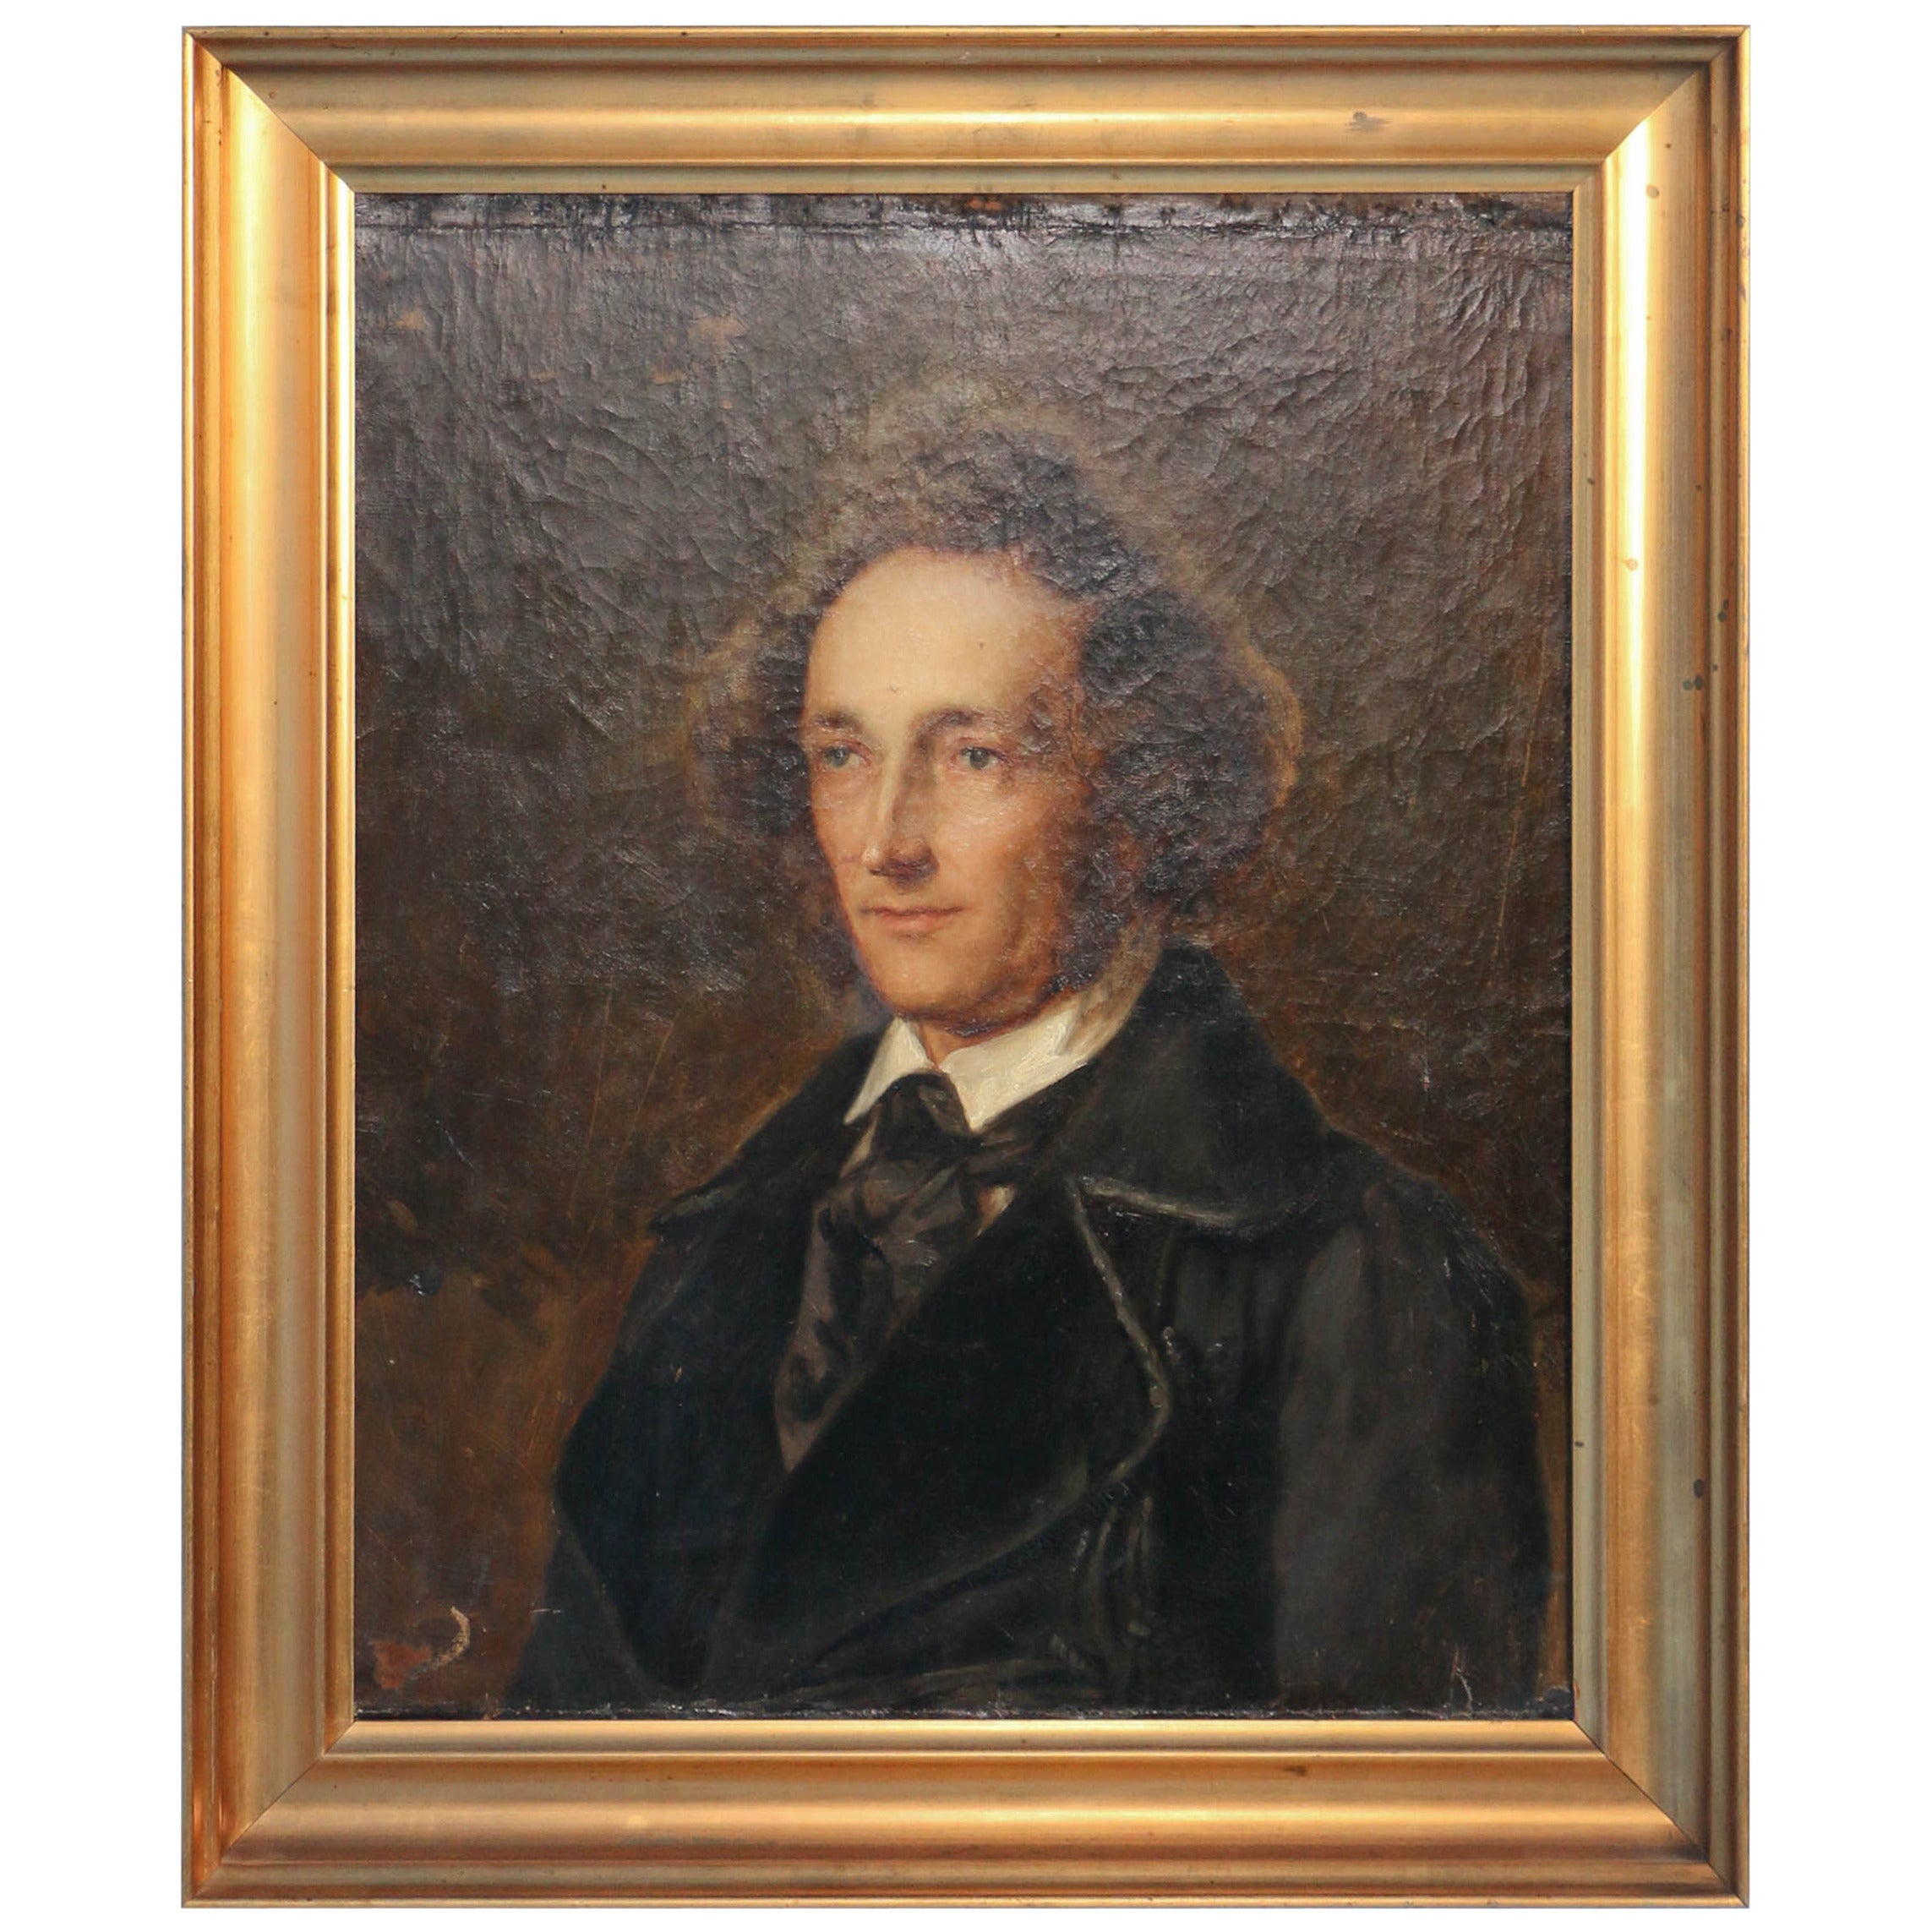 Portrait of Gentleman in Black, Original Oil on Canvas, circa 1800s